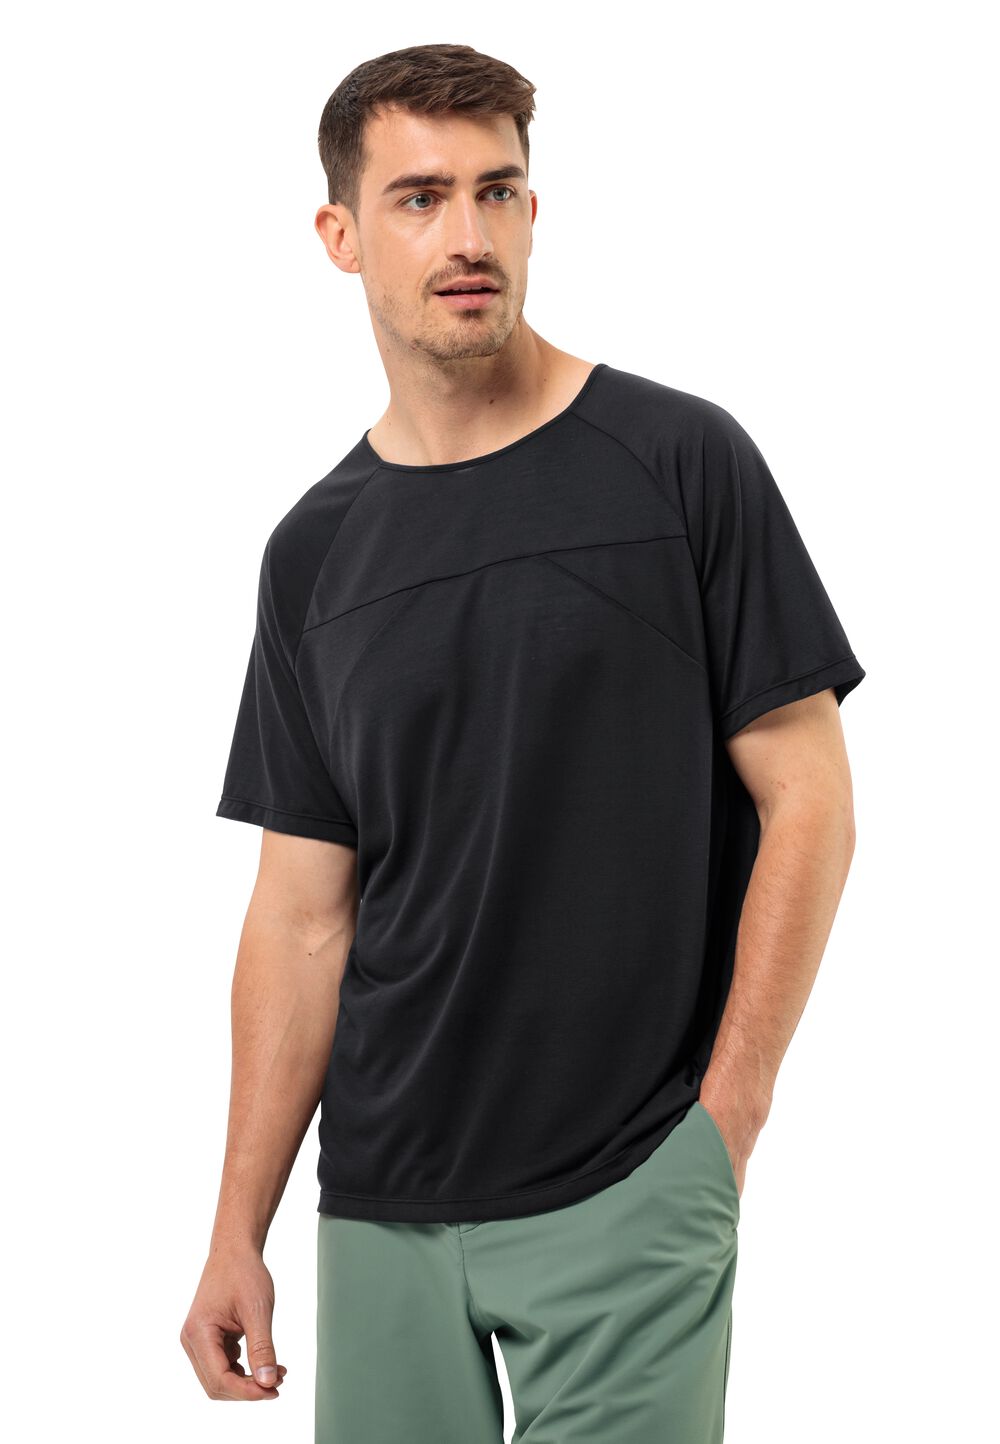 Jack Wolfskin Wanderword T-Shirt Men Functioneel shirt Heren XXL zwart granite black